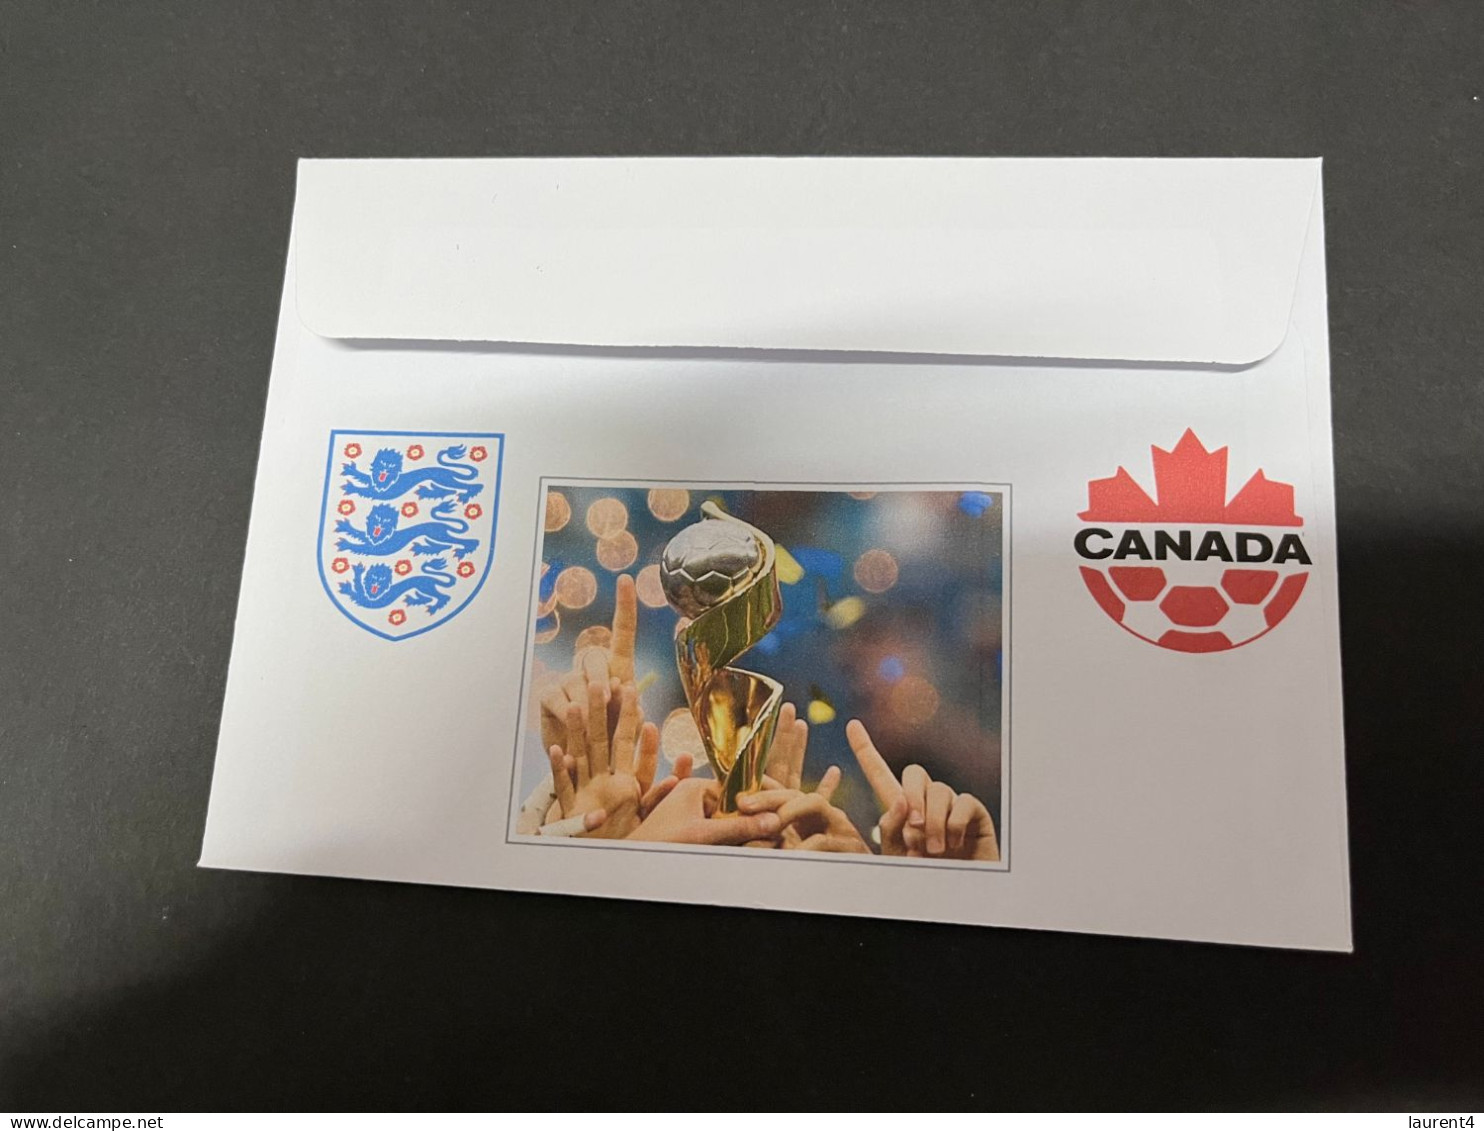 16-7-2023 (2 S 25 A) Women's Football World Cup ($1.20 FIFA Mascot Stamp) FIFA Friendly Final - UK (0) Canada (0) - 2 Dollars